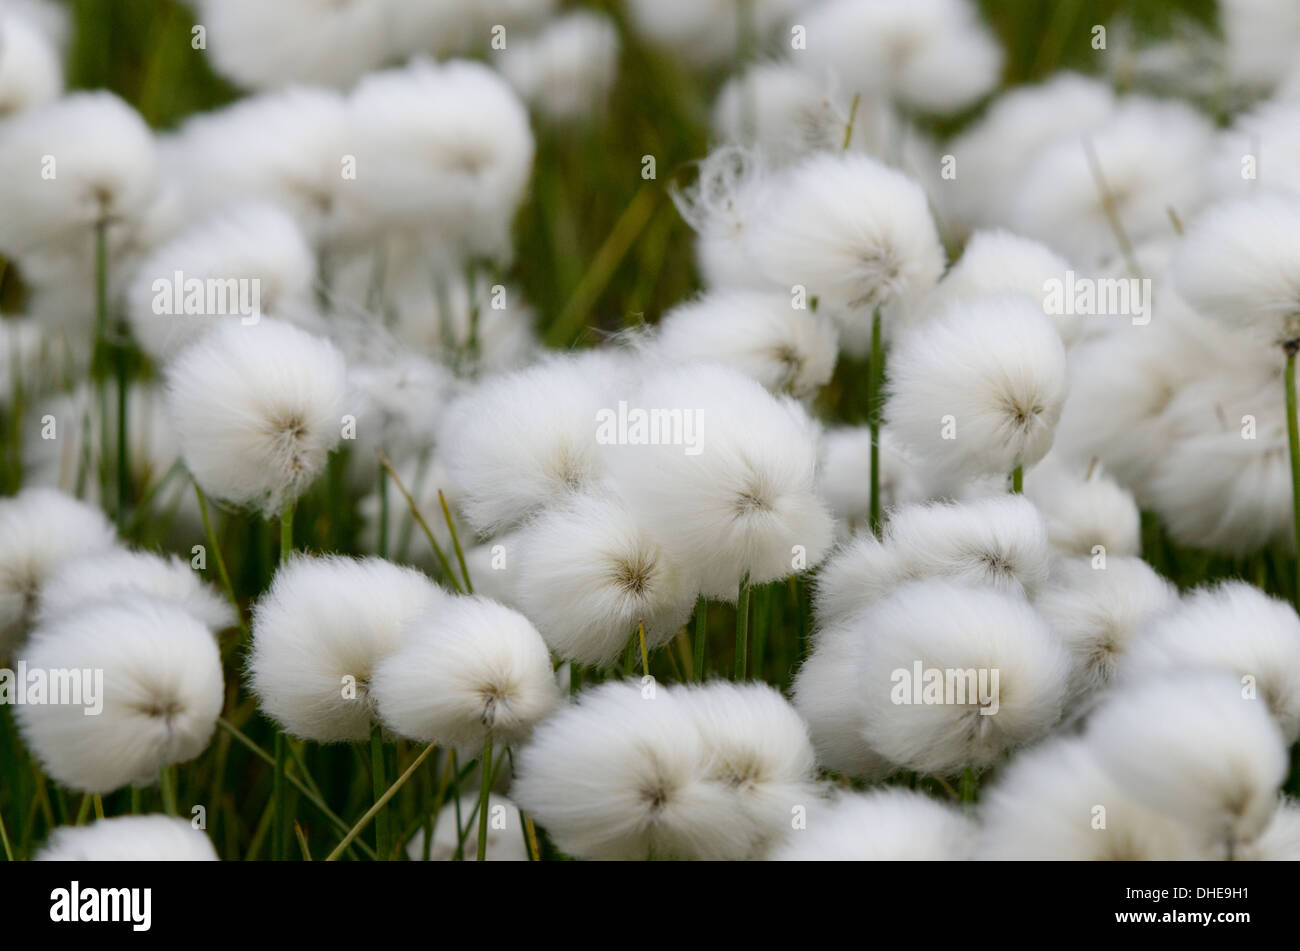 Canada, Nunavut, Qikiqtaaluk Region, Cape Dorset. Arctic cotton grass (Eriophorum) aka cottongrass, cotton-grass or cottonsedge. Stock Photo